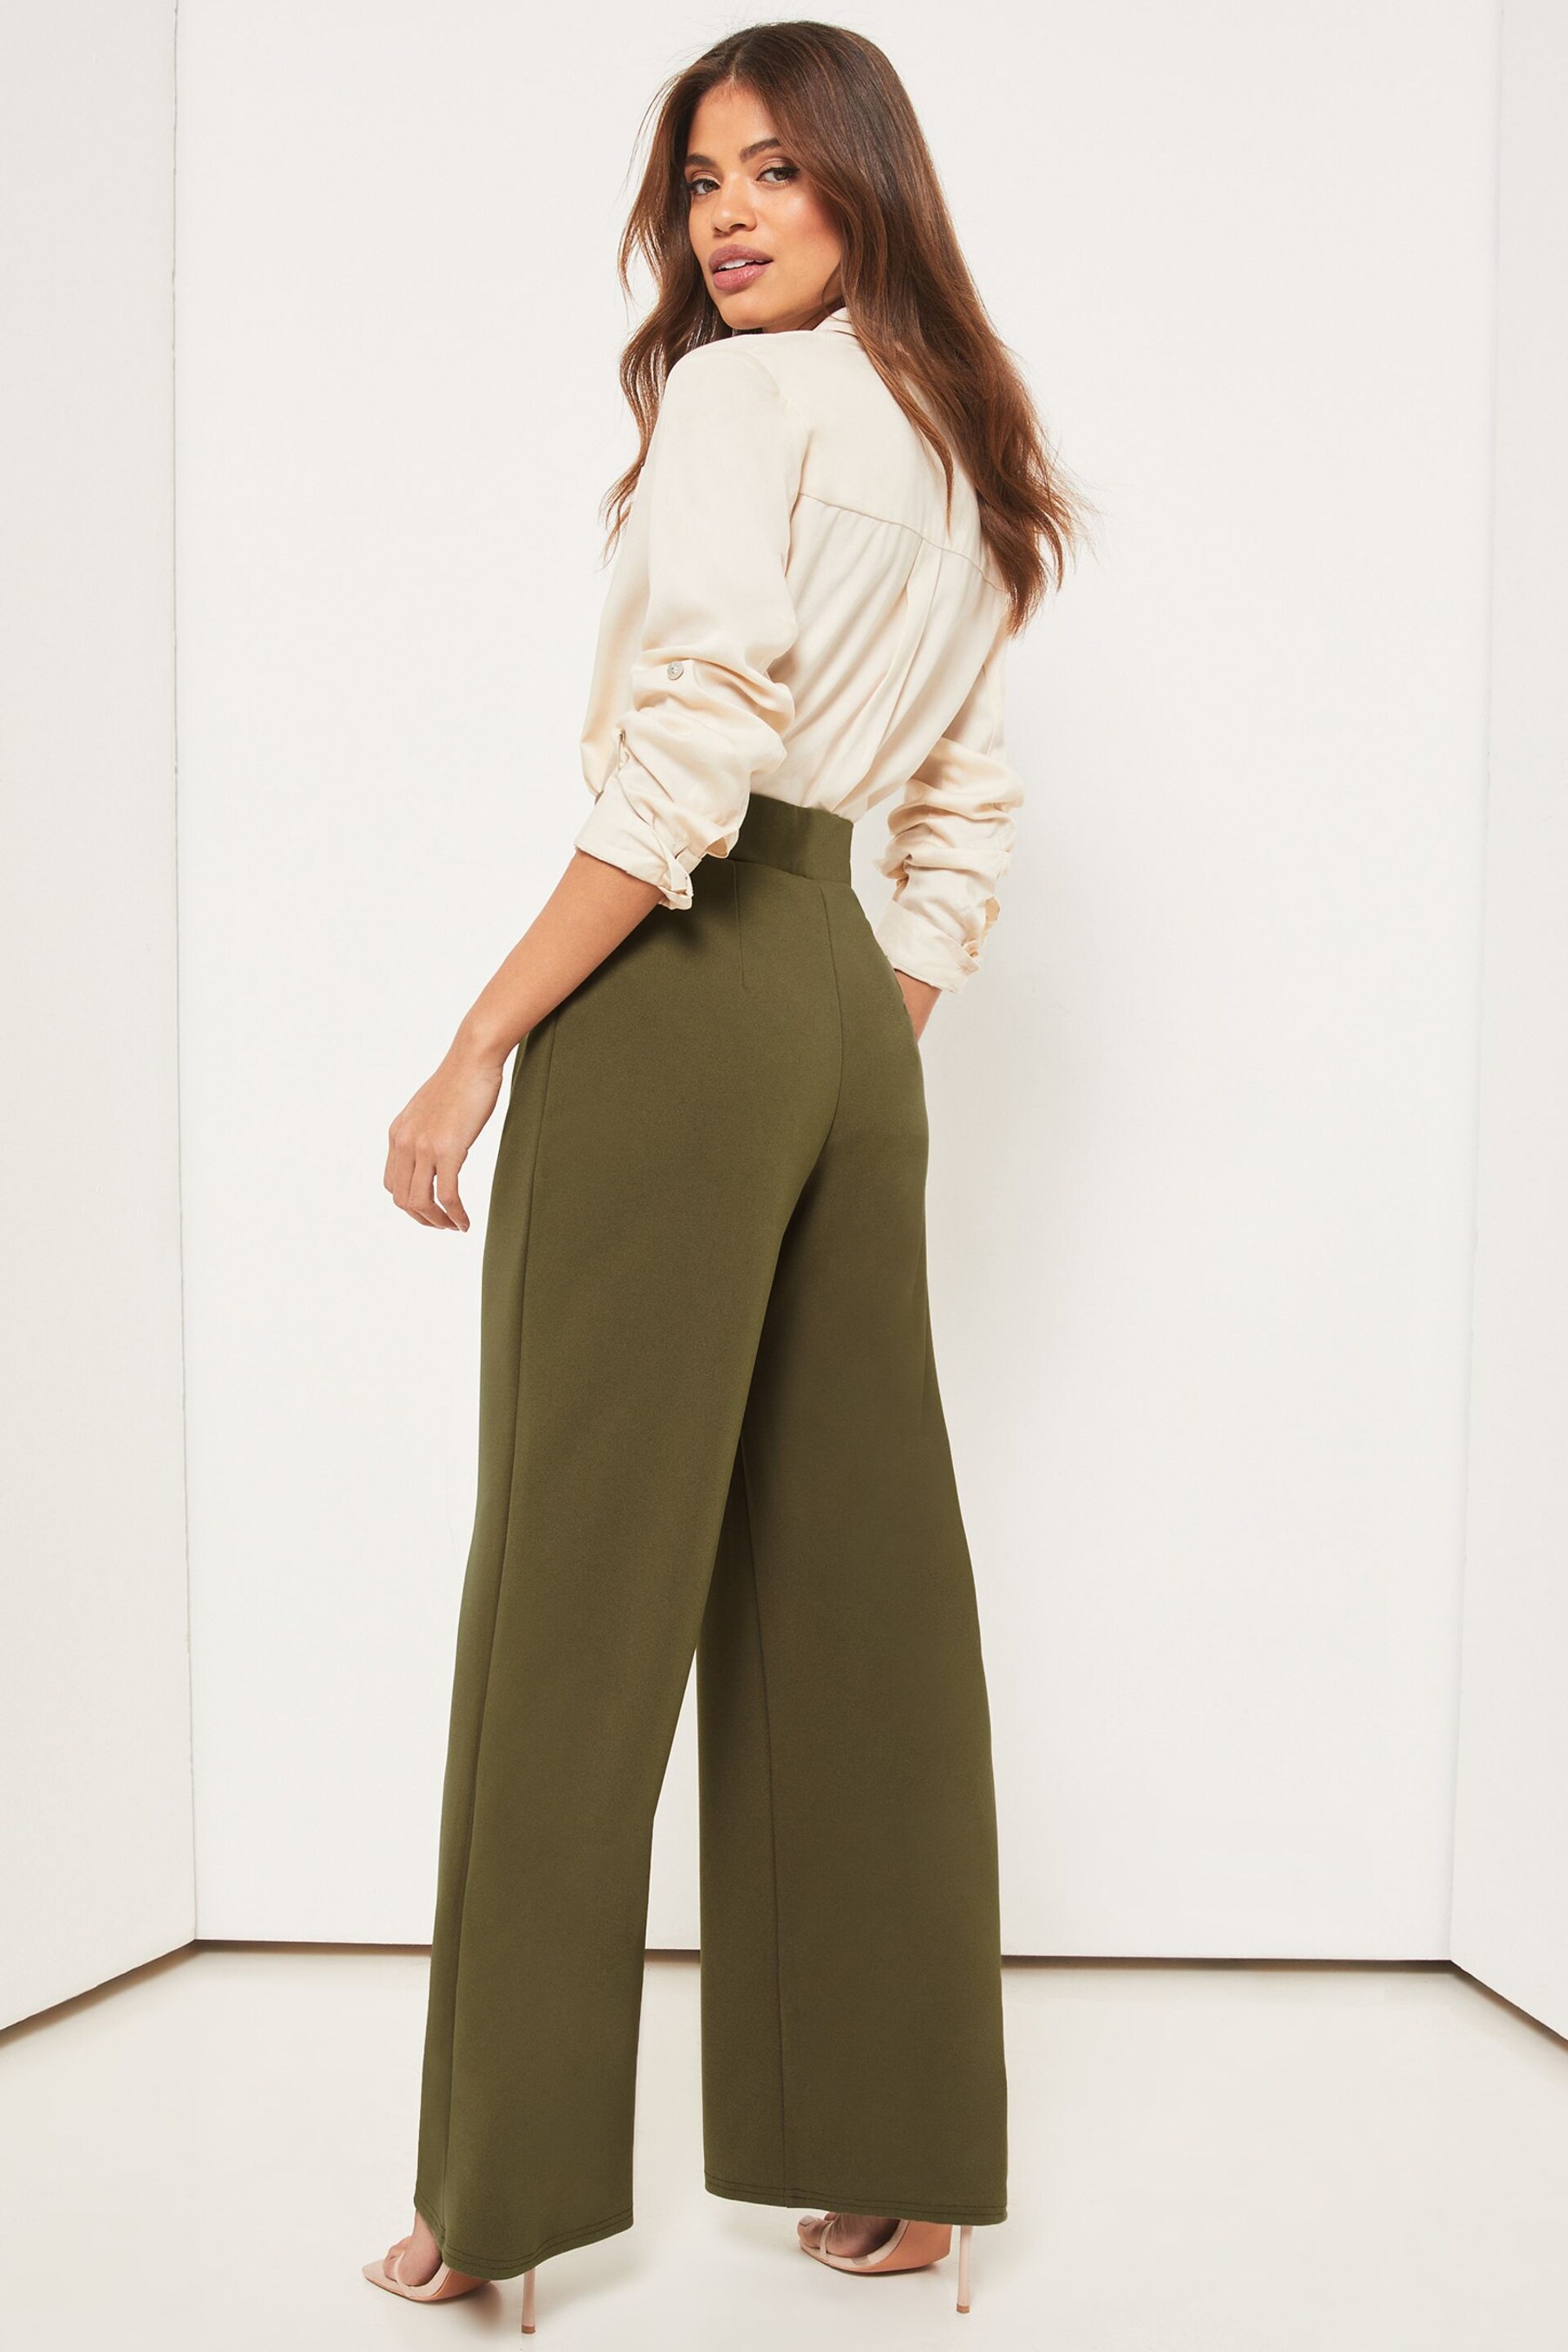 Lipsy Khaki Green Twill Petite High Waist Wide Leg Tailored Trousers - Image 2 of 4